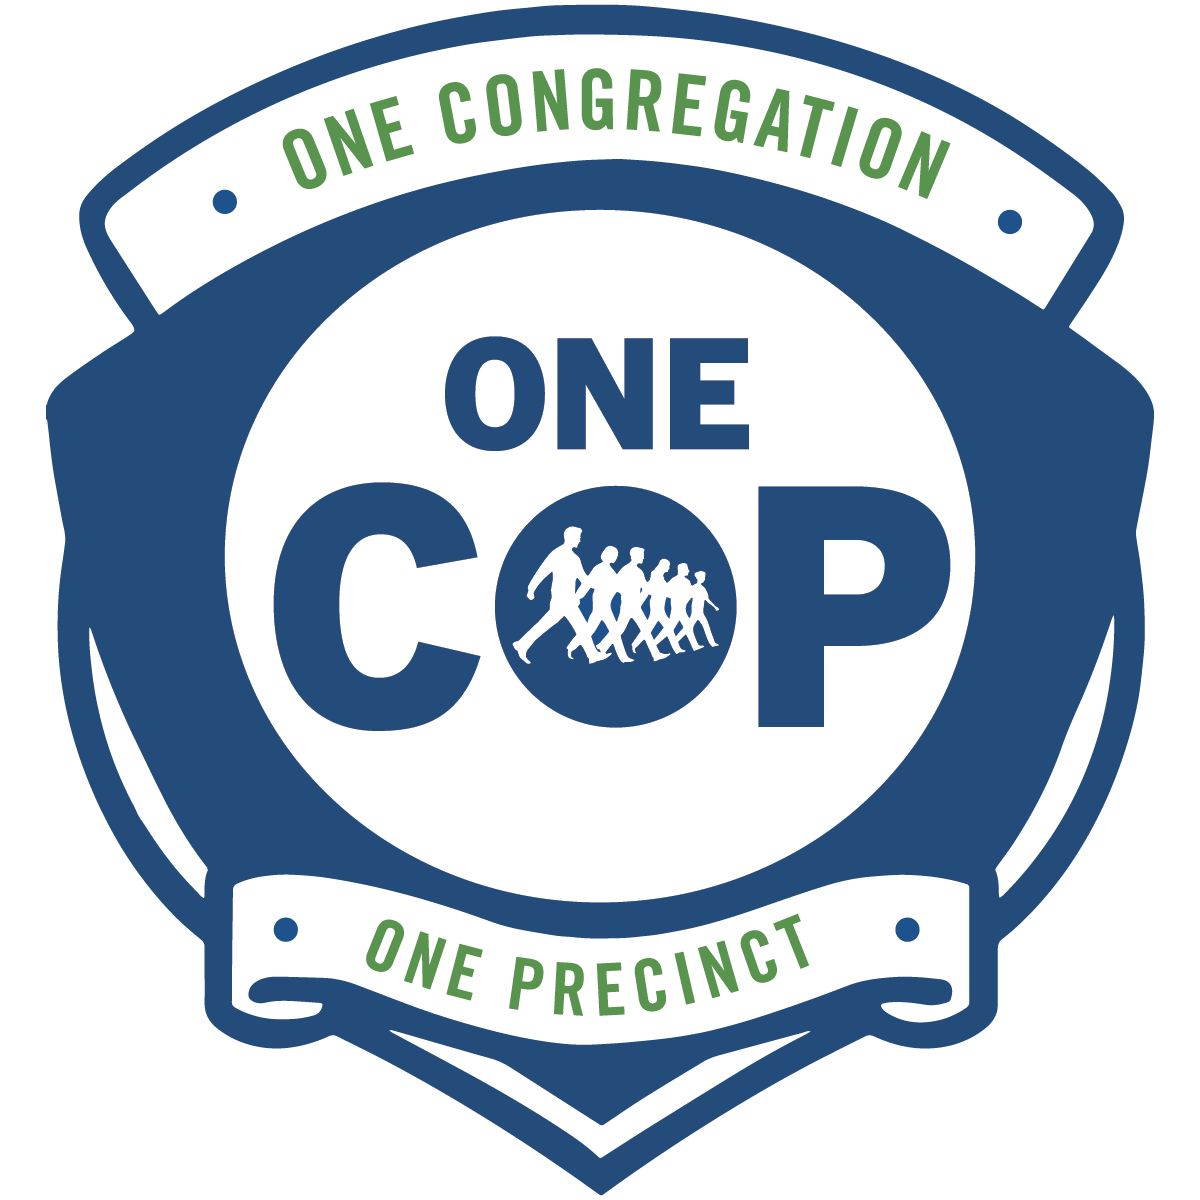 OneCOP - One Congregation. One Precinct.